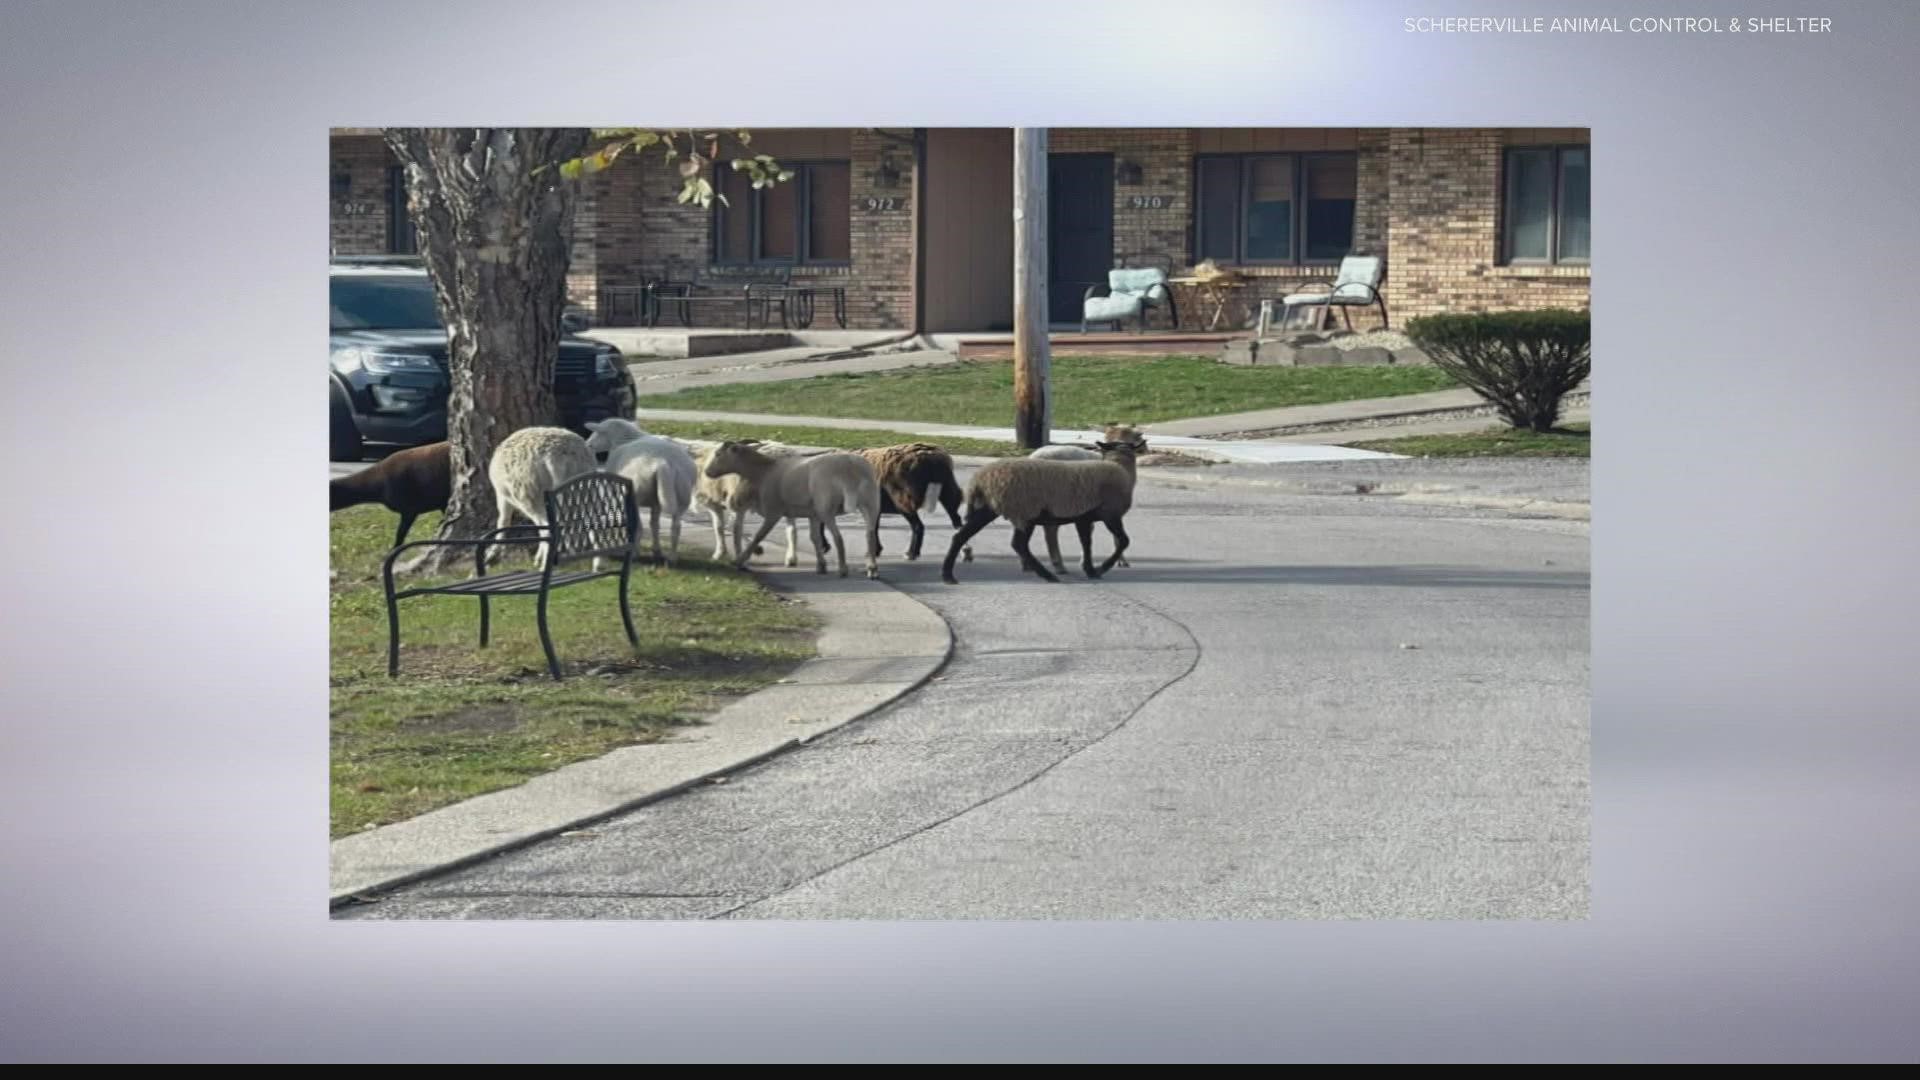 Schererville Animal Control said someone found eight sheep wandering through a neighborhood.